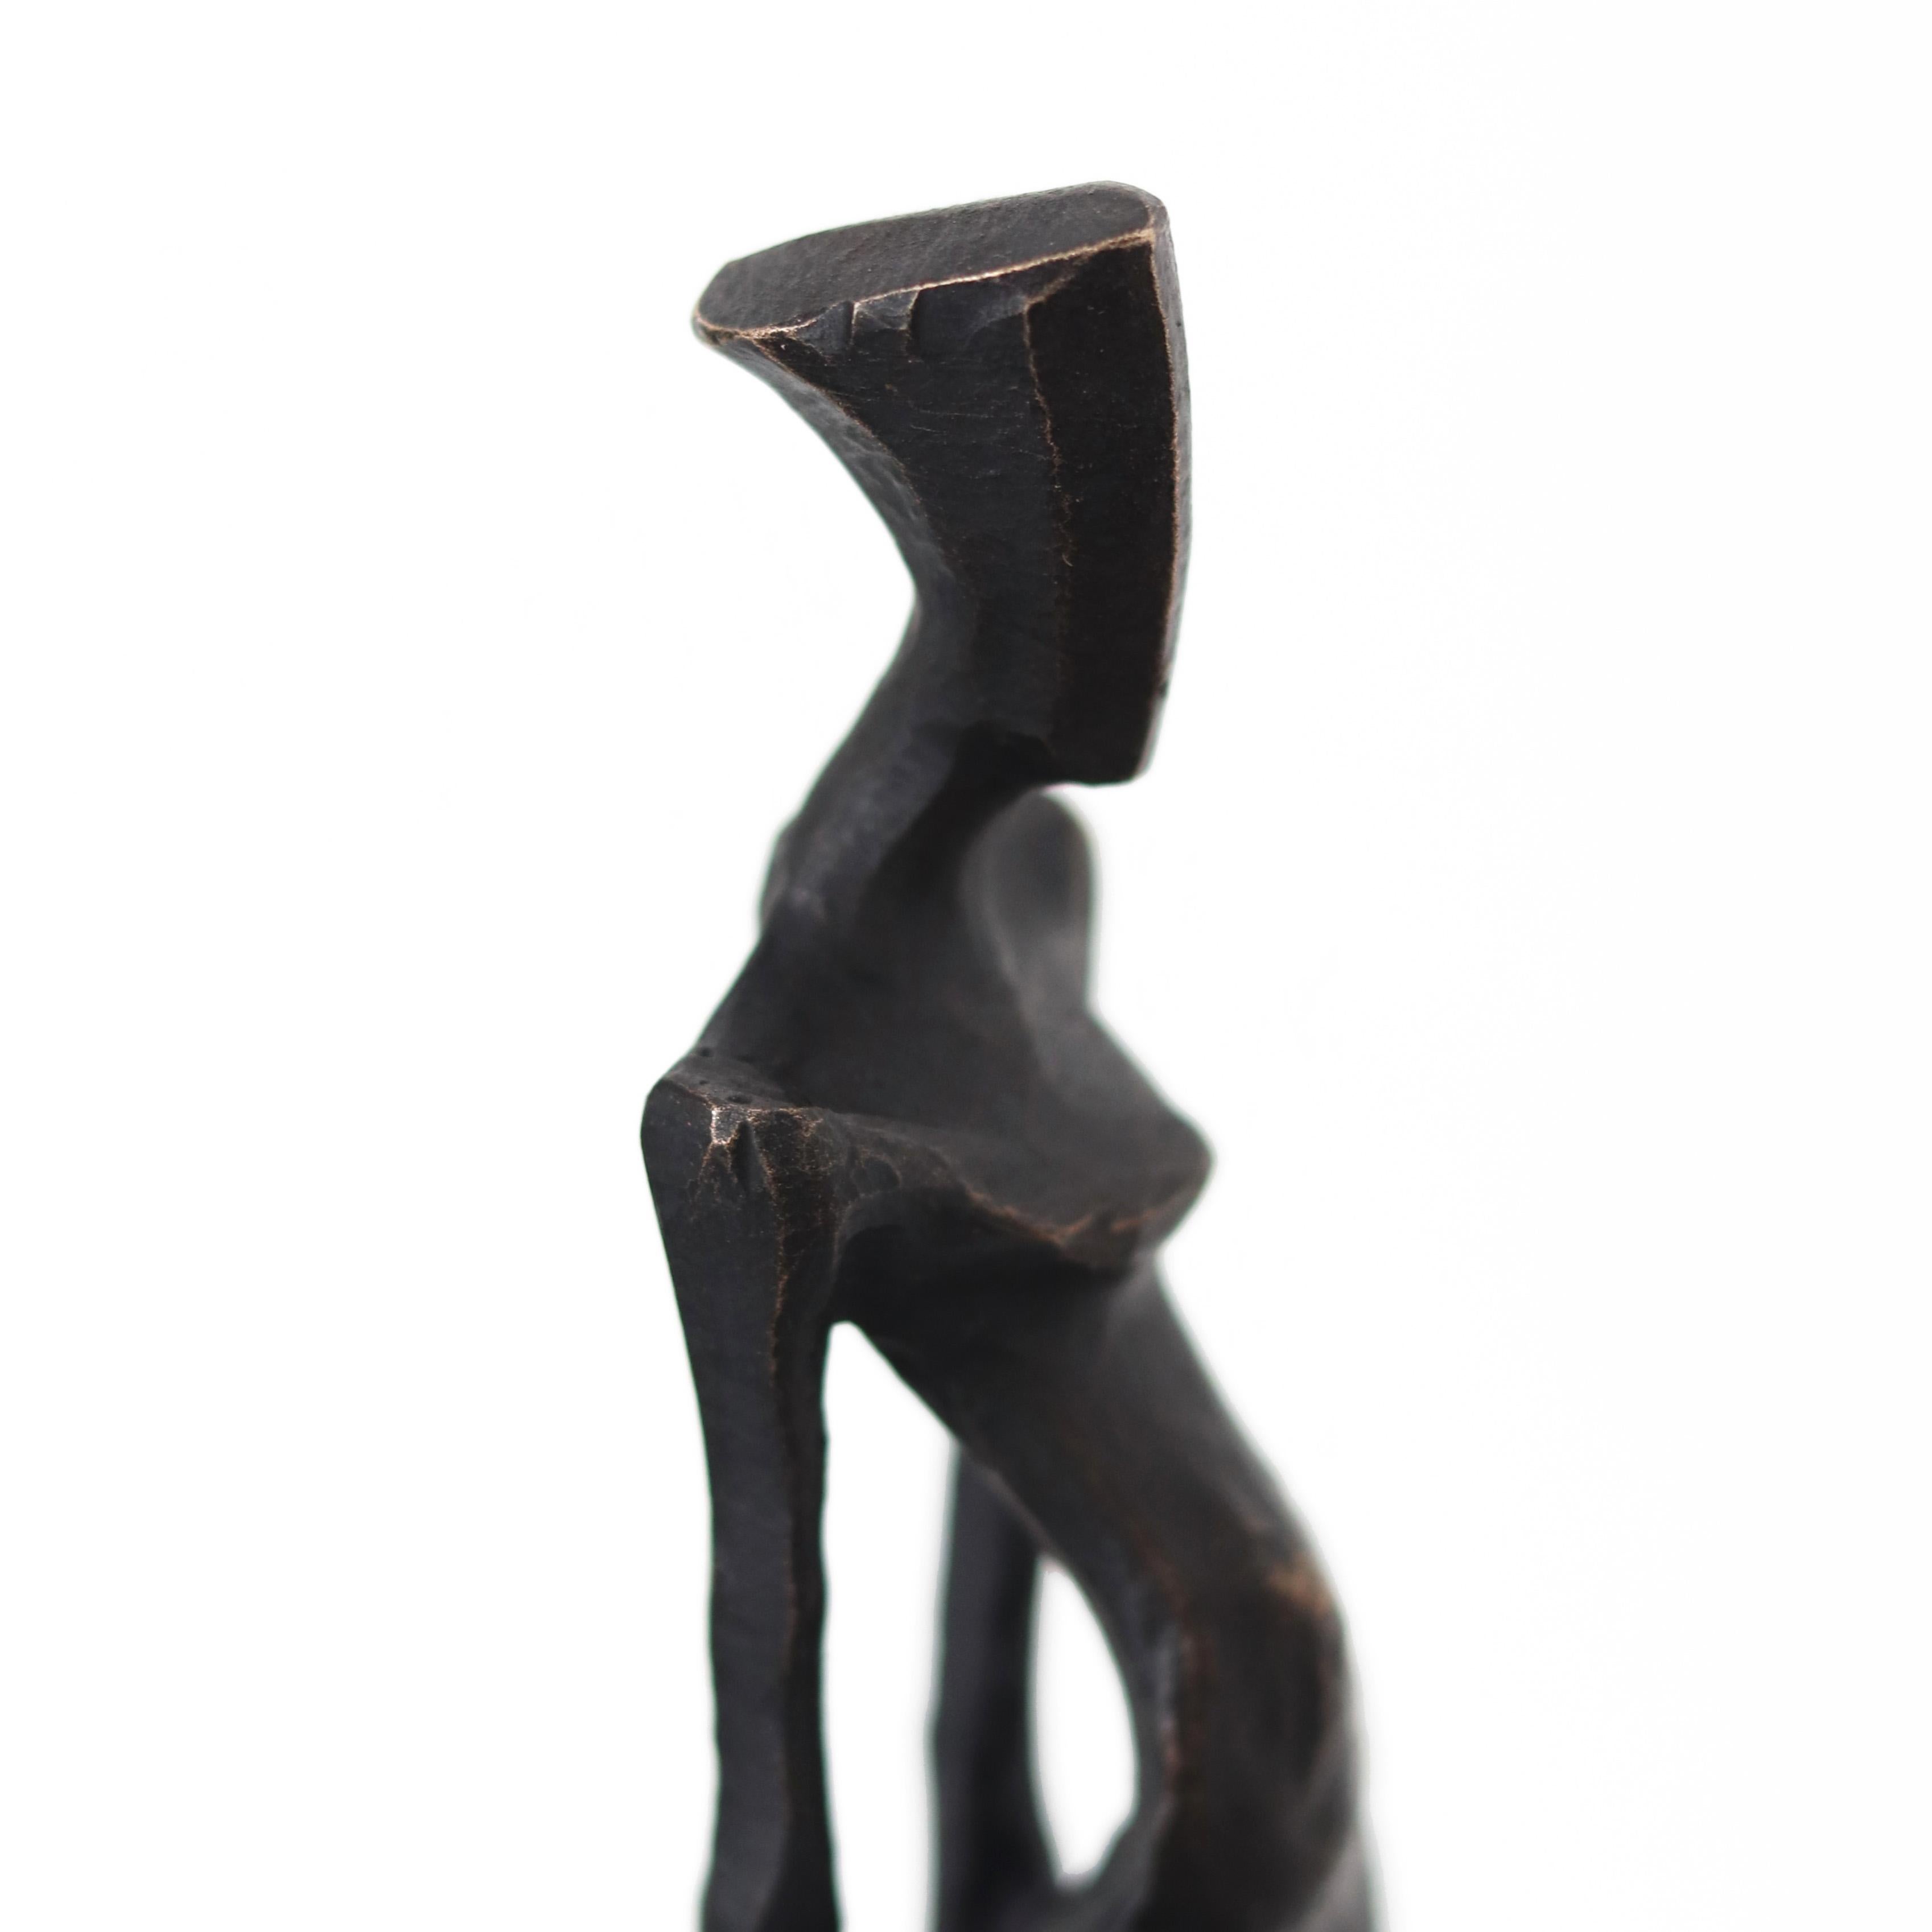 Hera  - Graceful Modern Figurative Bronze Sculpture - Original Art and Design  For Sale 1